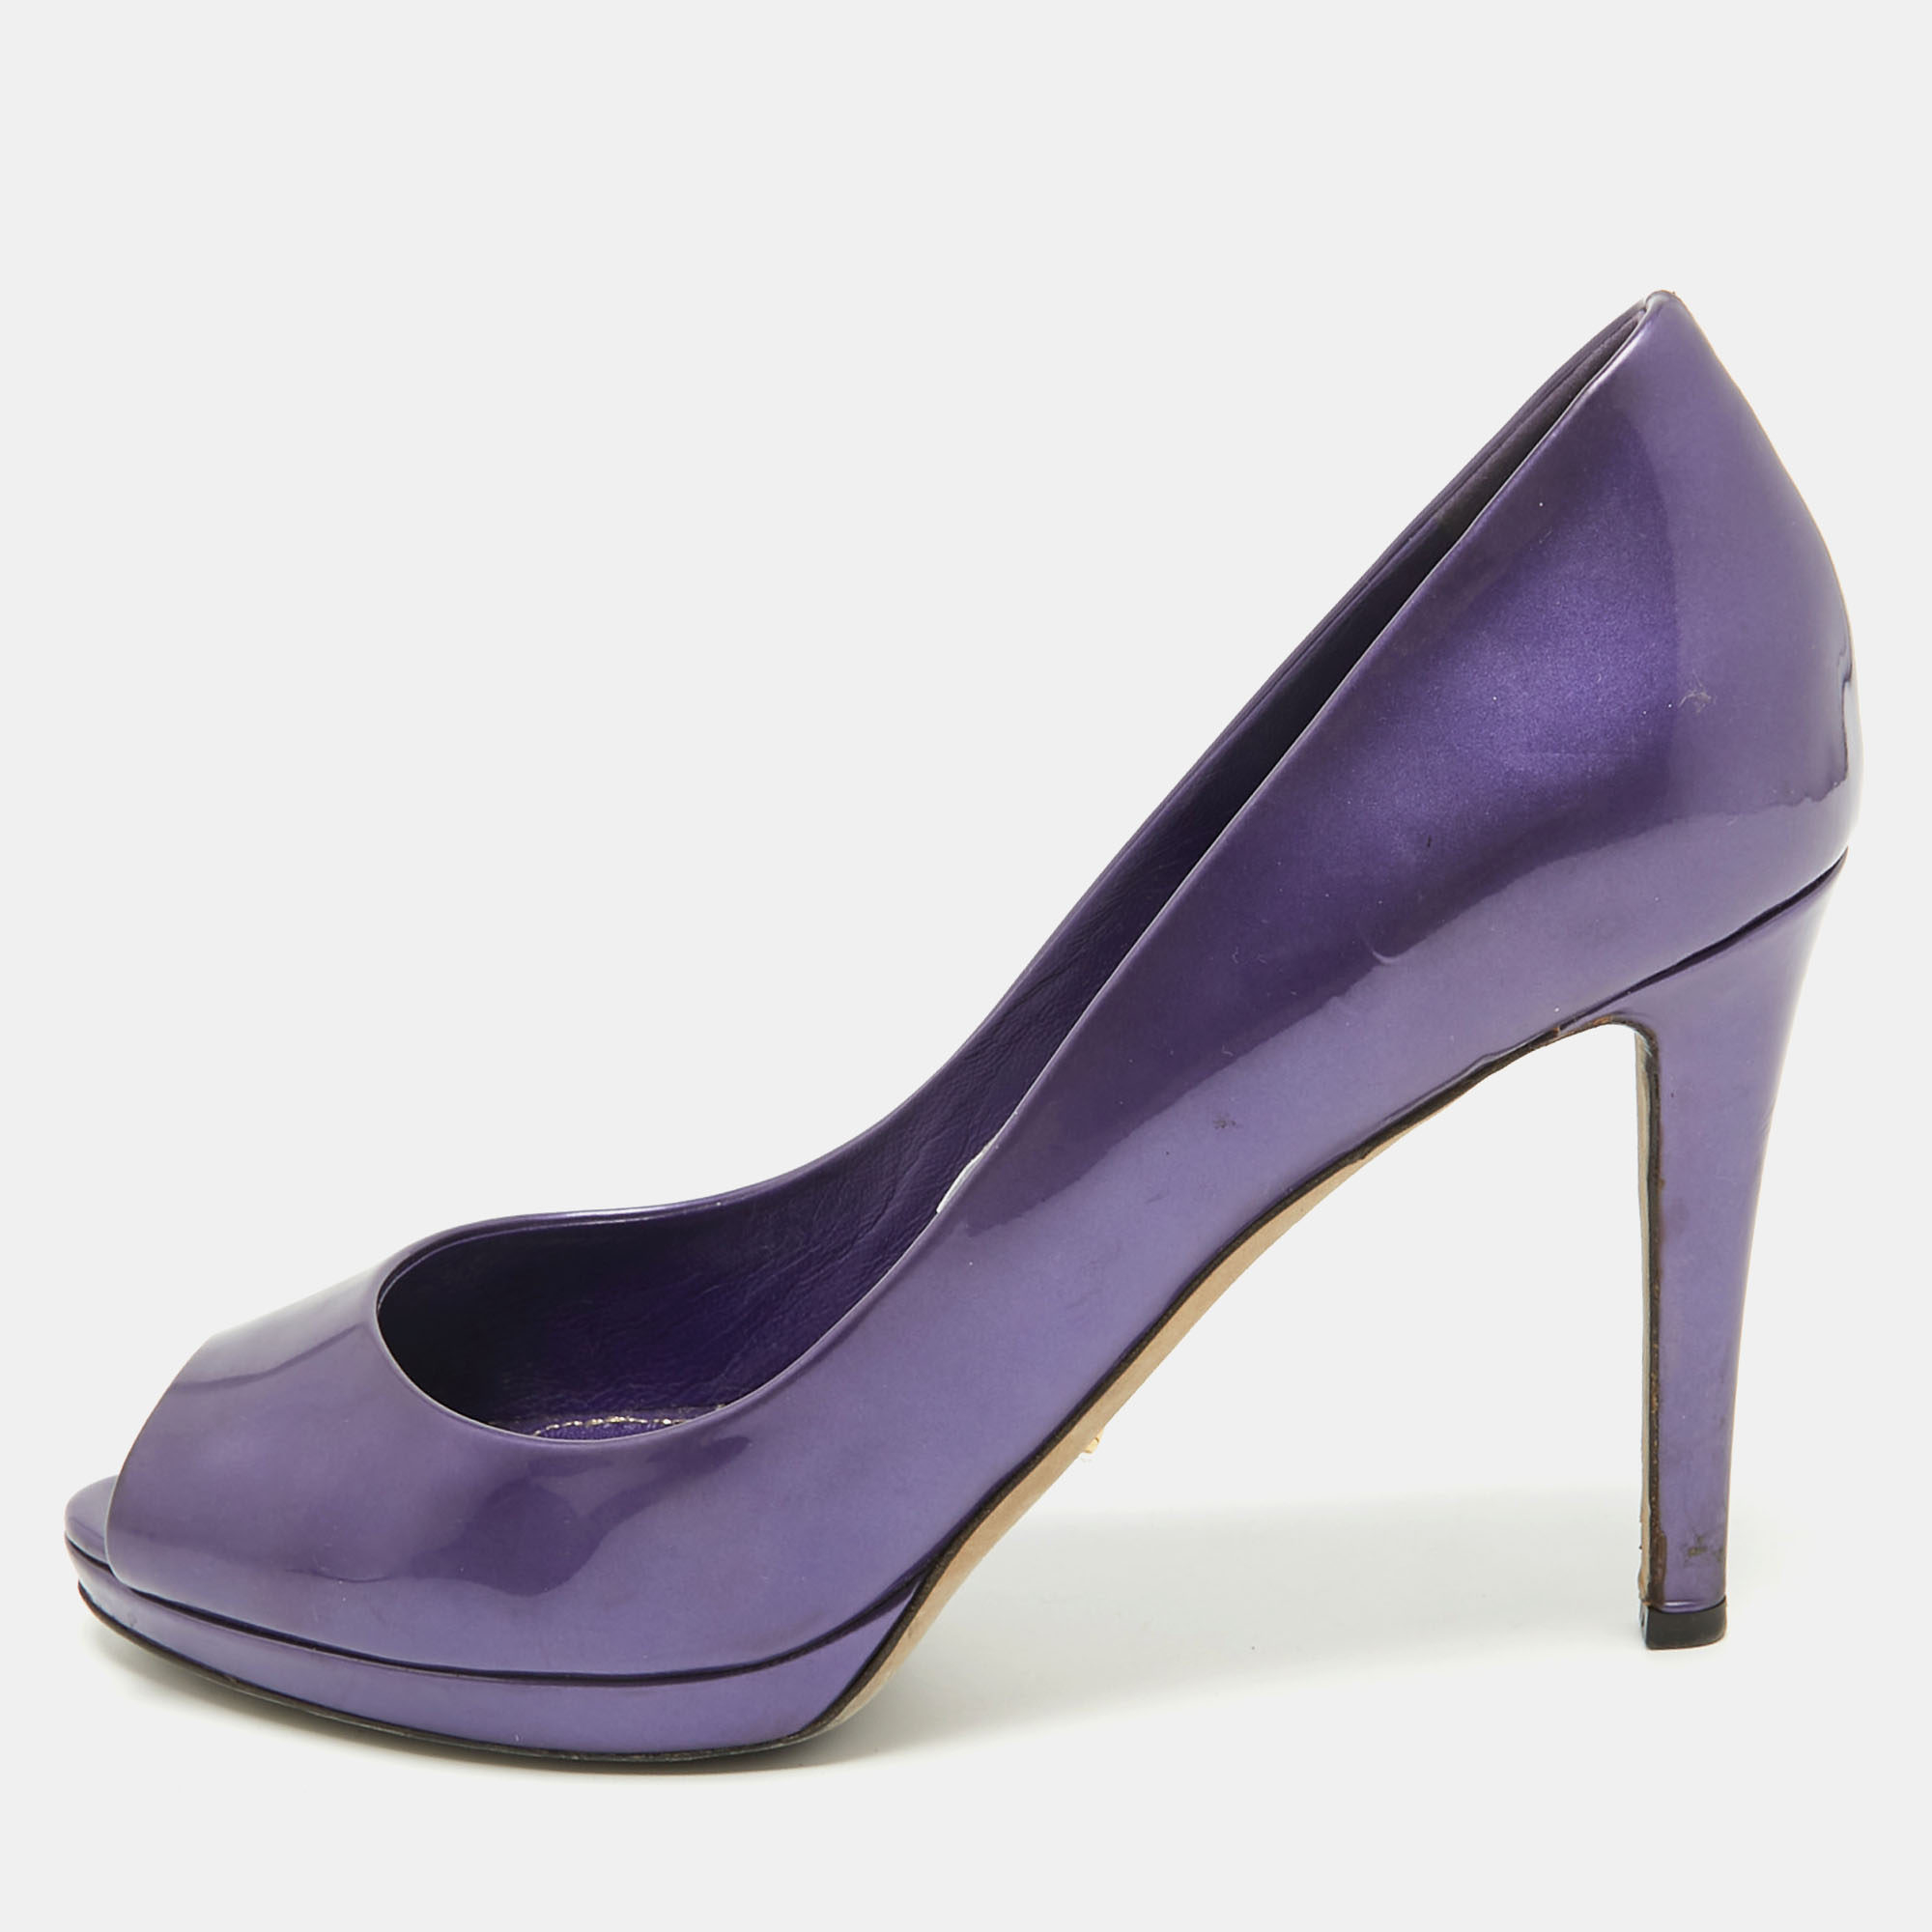 Sergio rossi purple patent leather peep toe platform pumps size 38.5